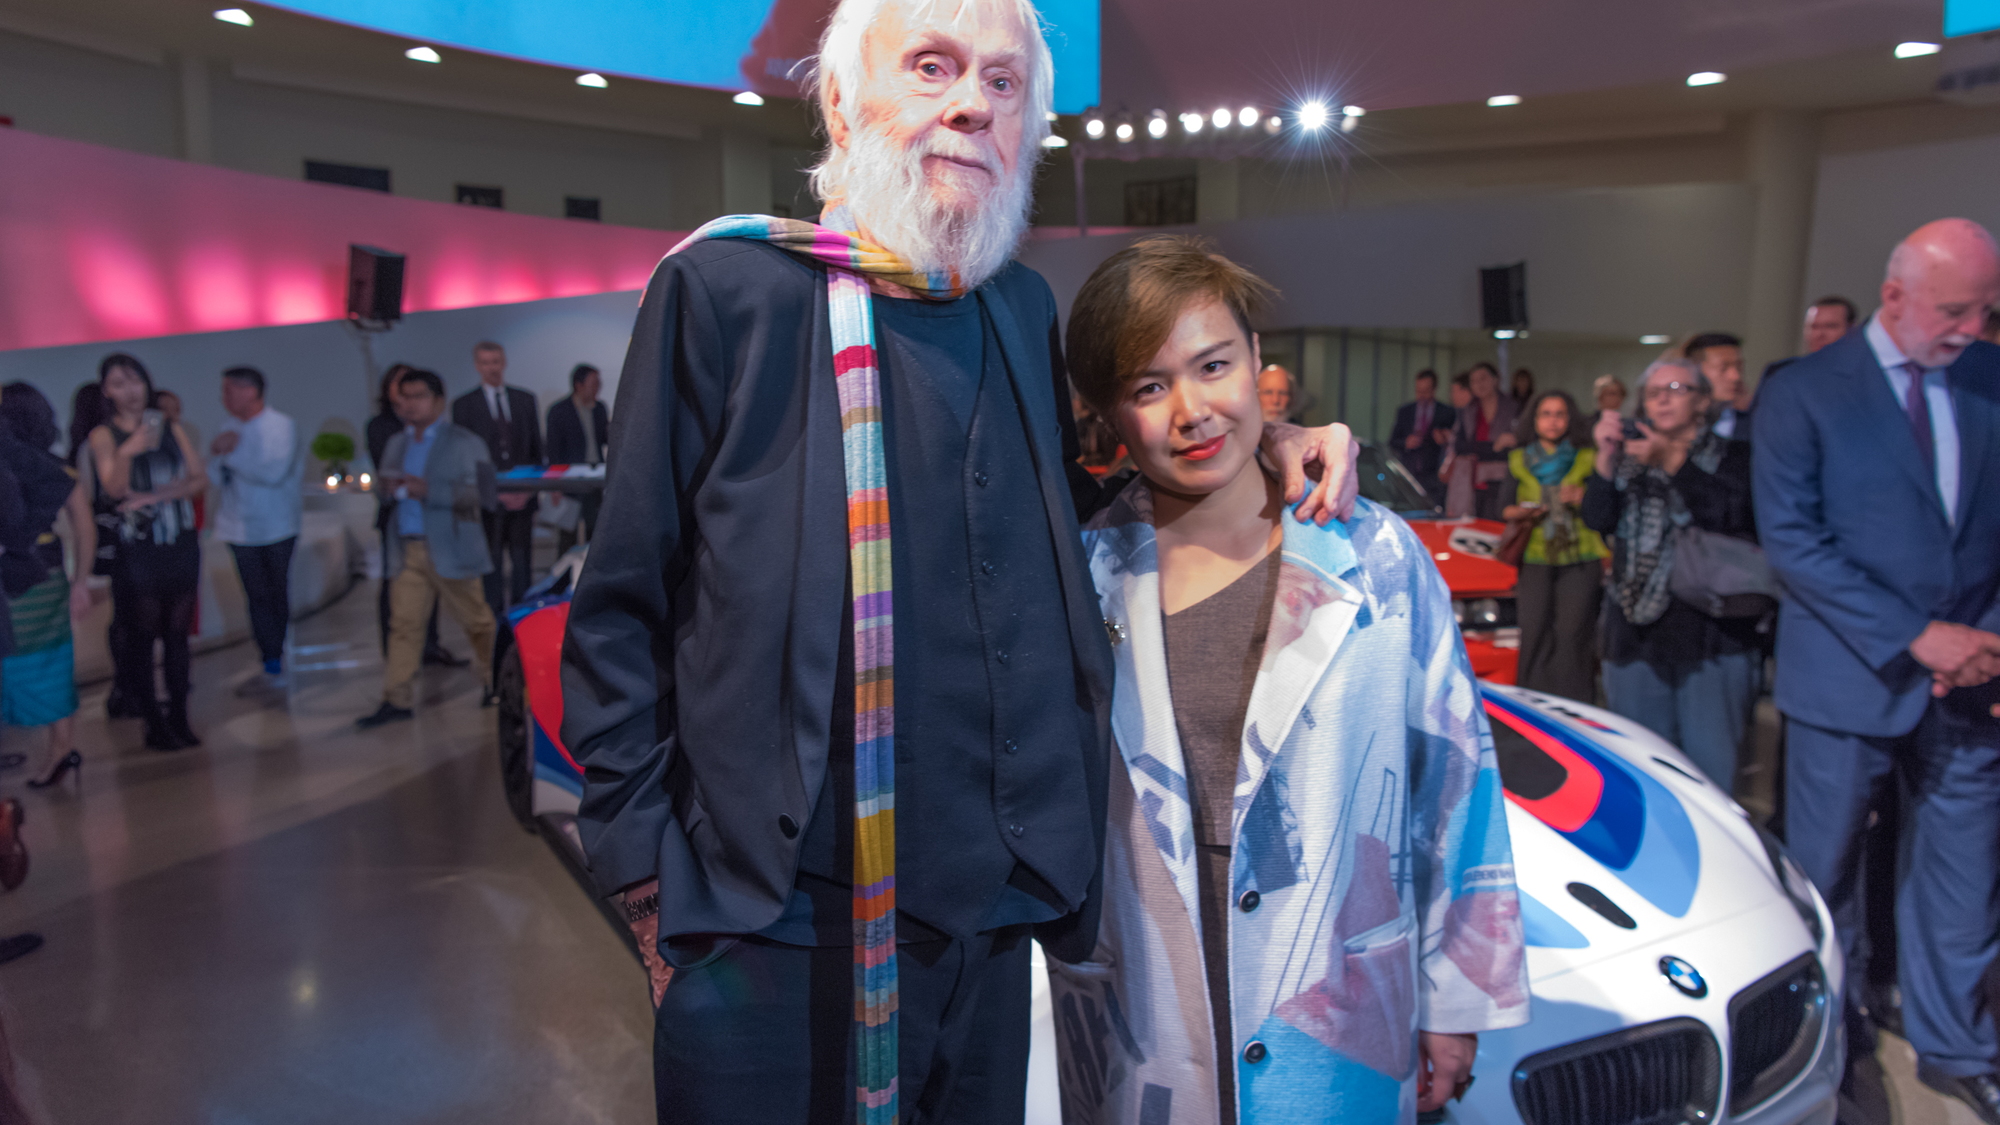 John Baldessari and Cao Fei, the new BMW Art Car artists